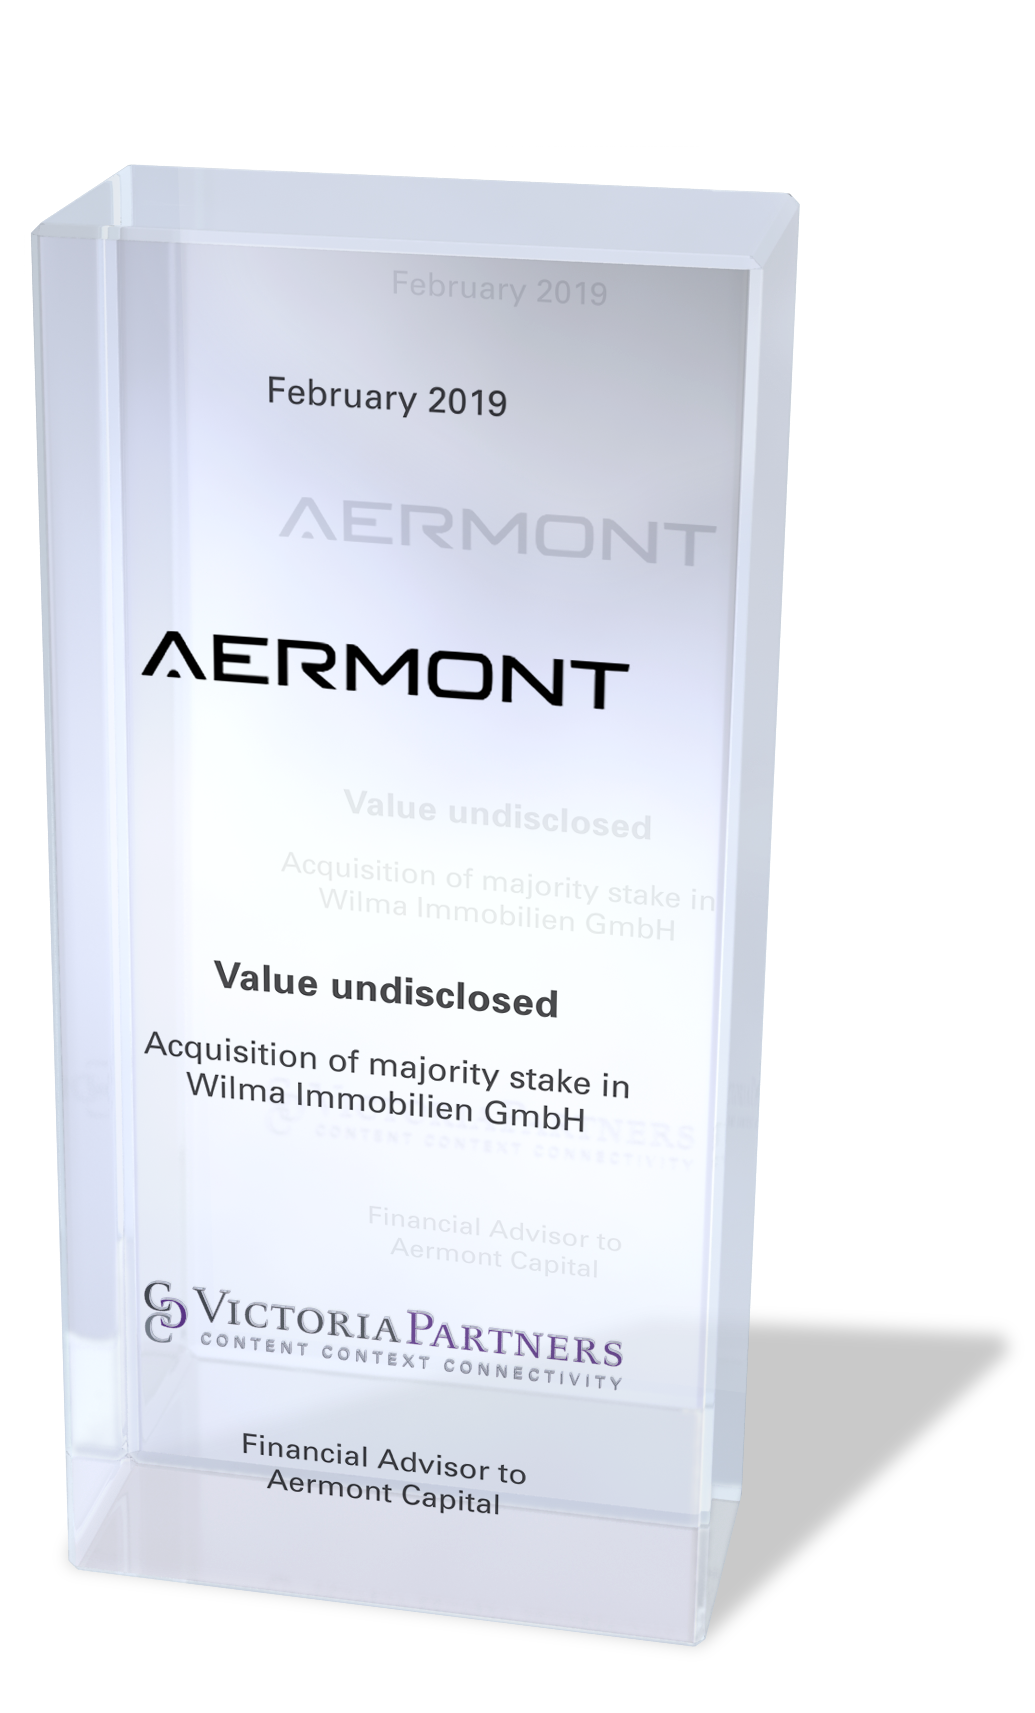 VICTORIAPARTNERS - Financial Advisor to Aermont Capital - February 2019